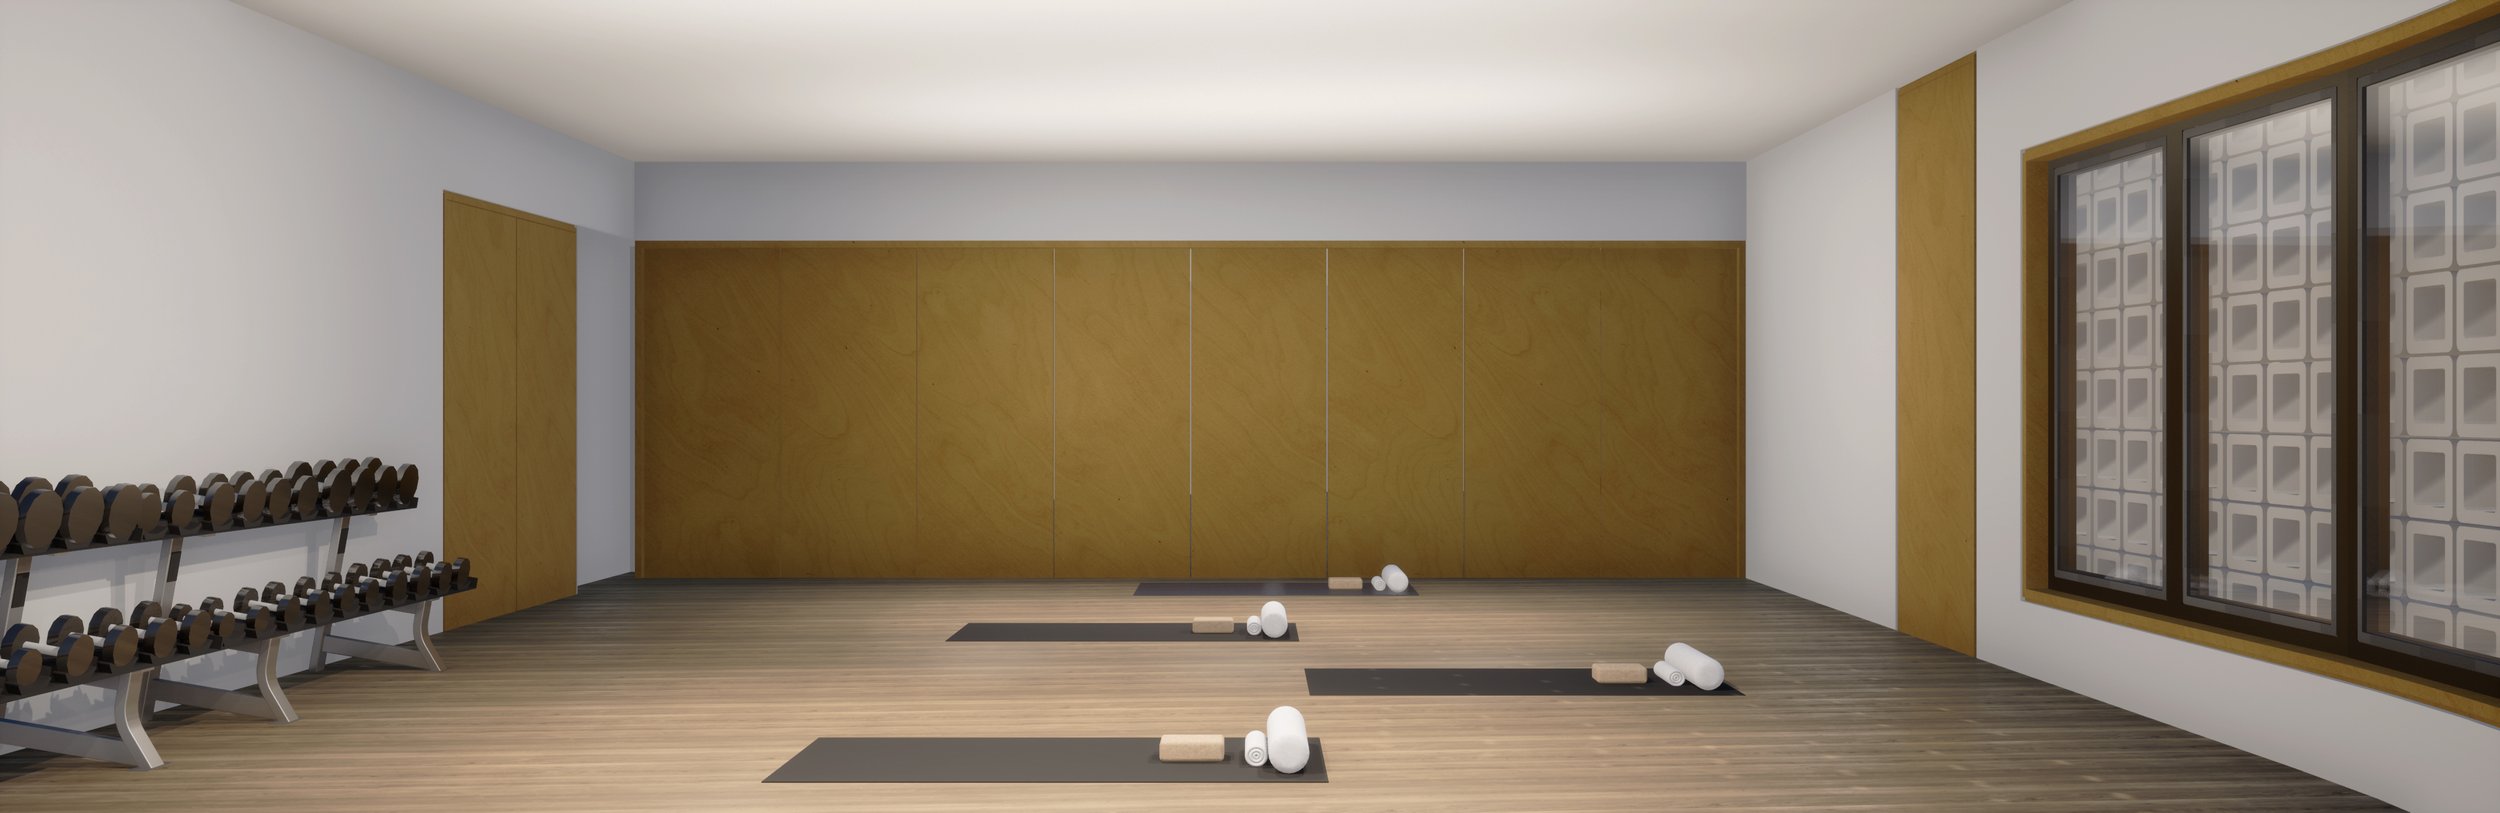 21 Gym Yoga Studio.jpg